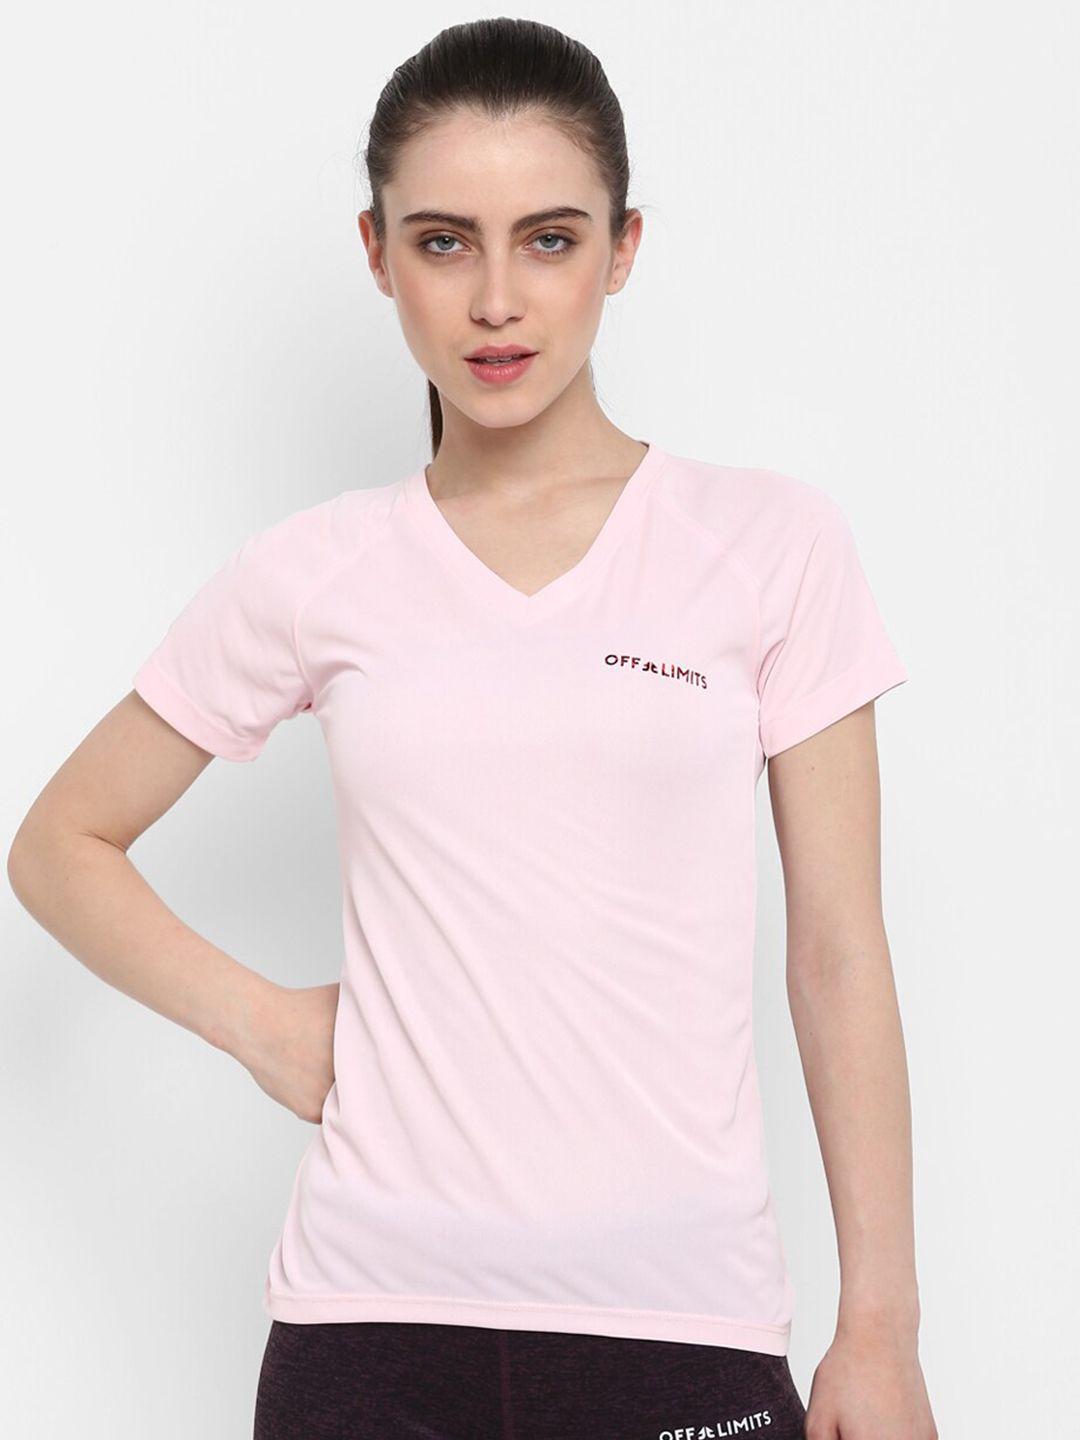 off-limits-women-pink-v-neck-regular-fit-t-shirt